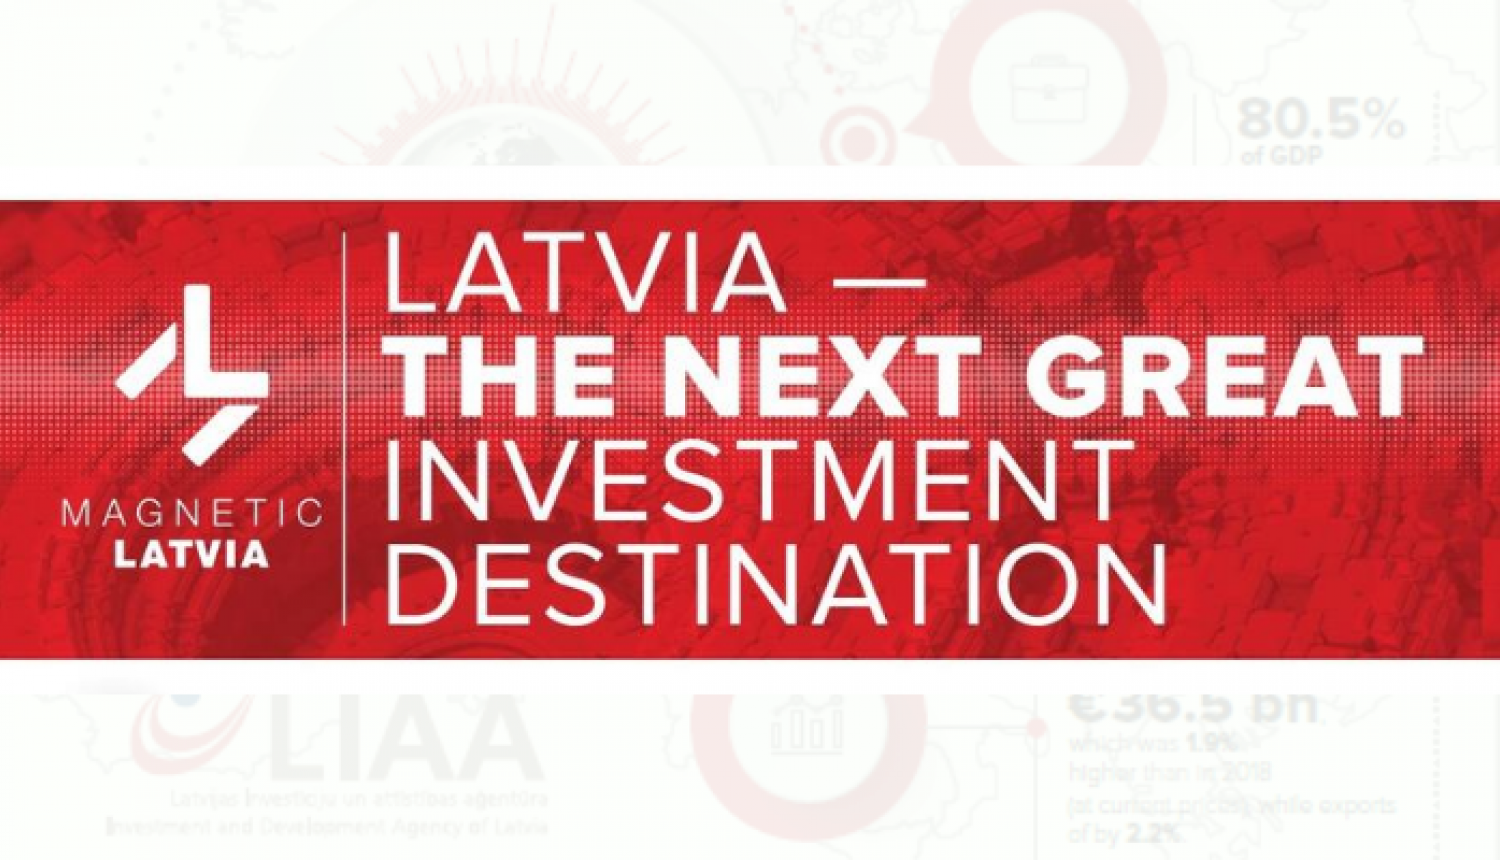 Latvia — the next great investment destination